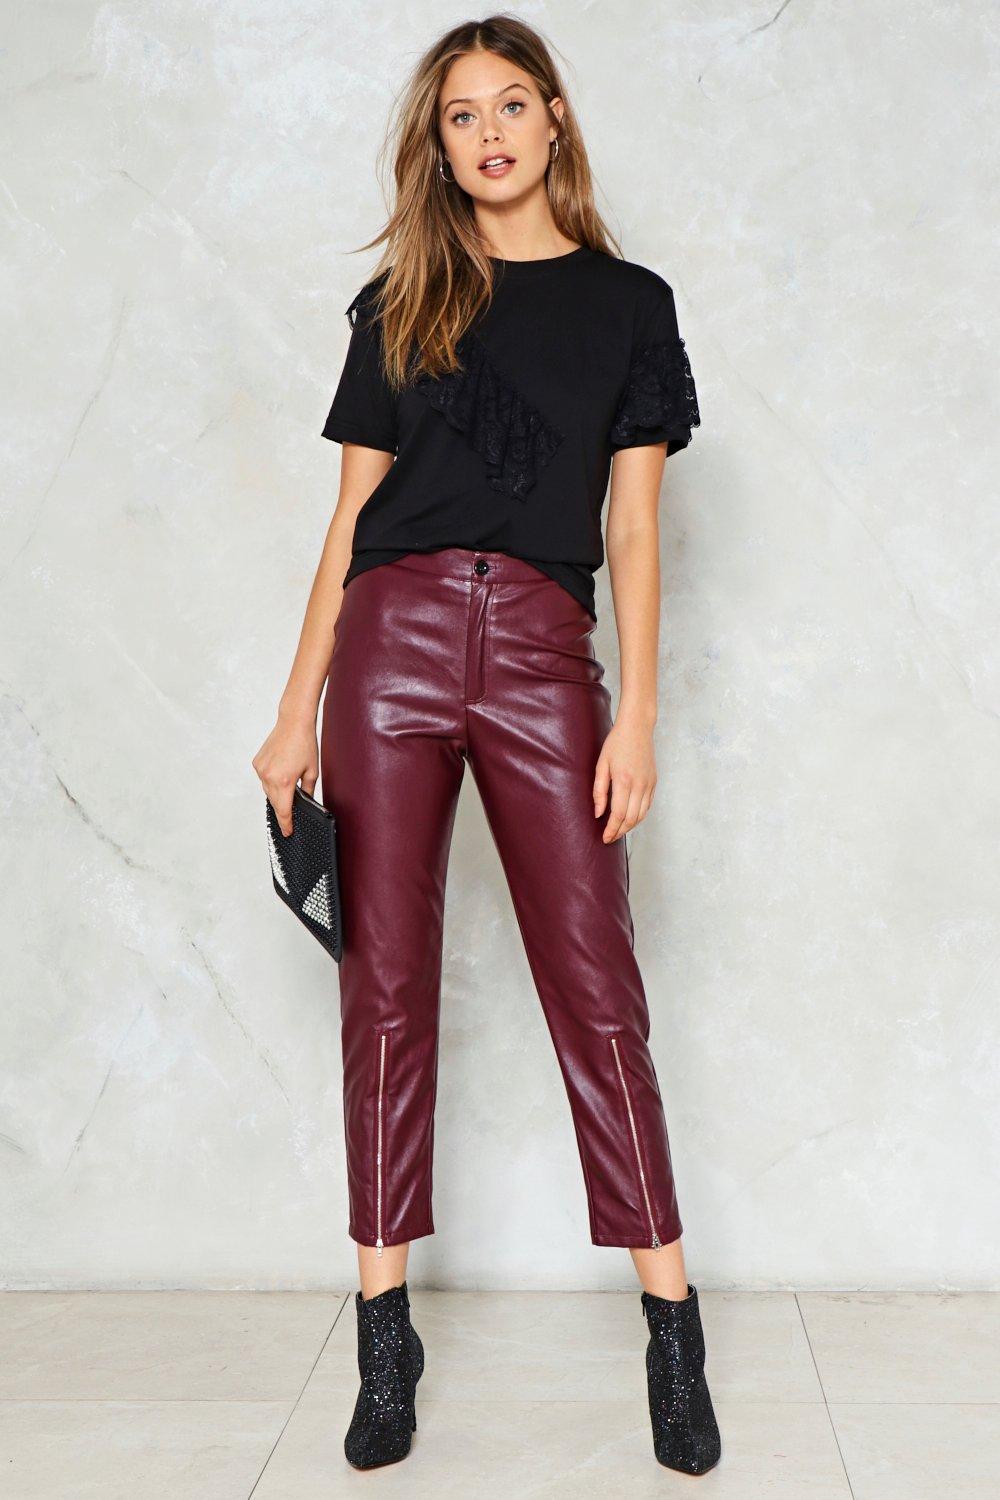 leather dress pants